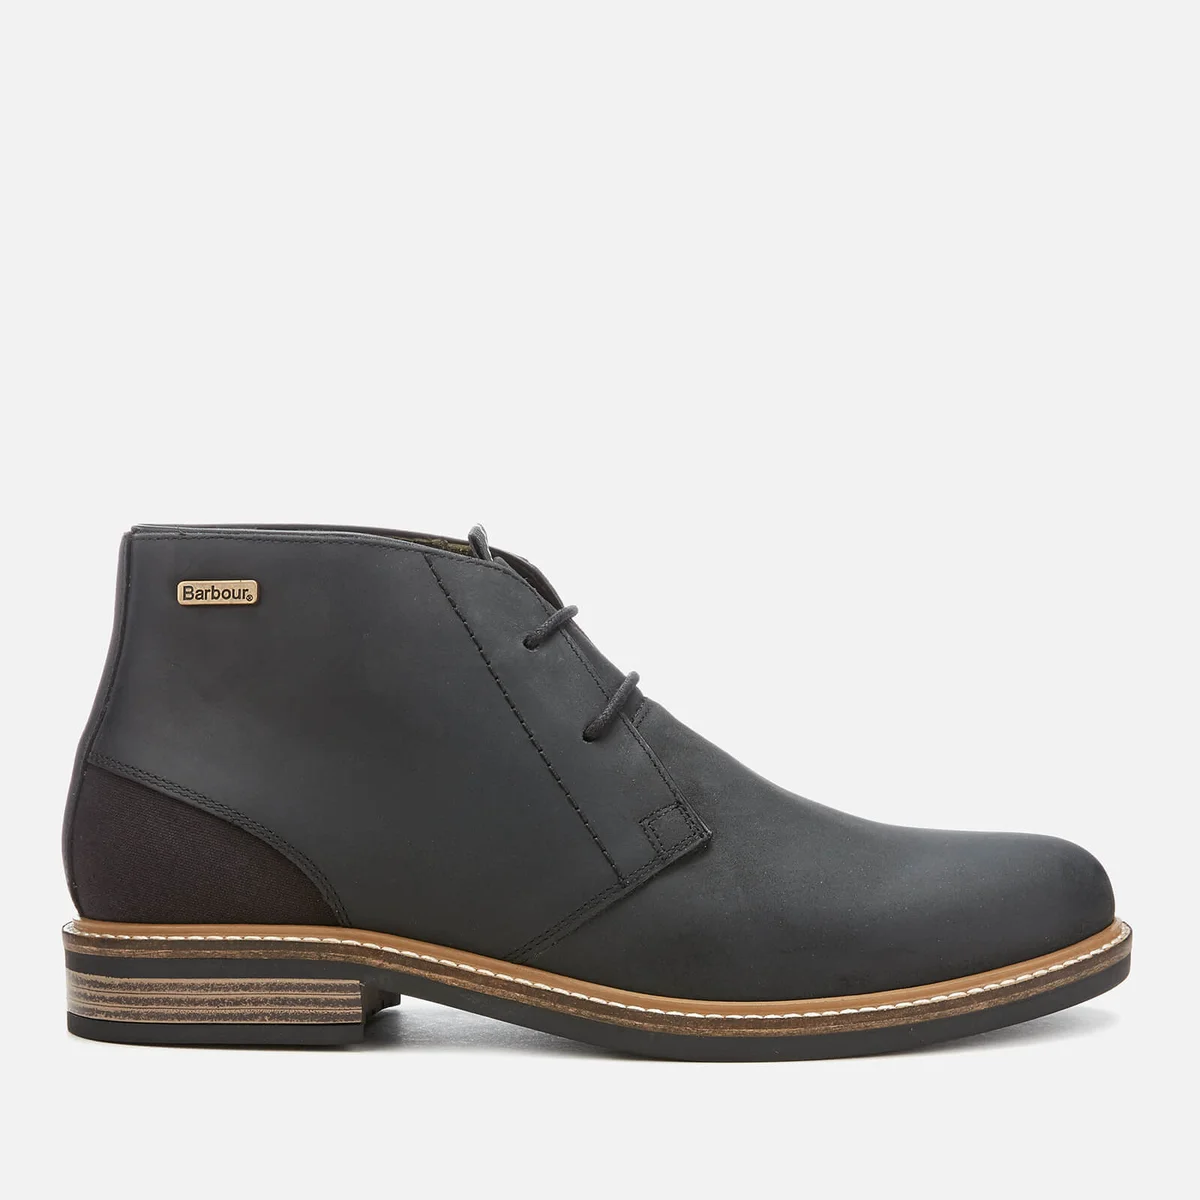 Barbour Men's Readhead Leather Chukka Boots - Black Image 1